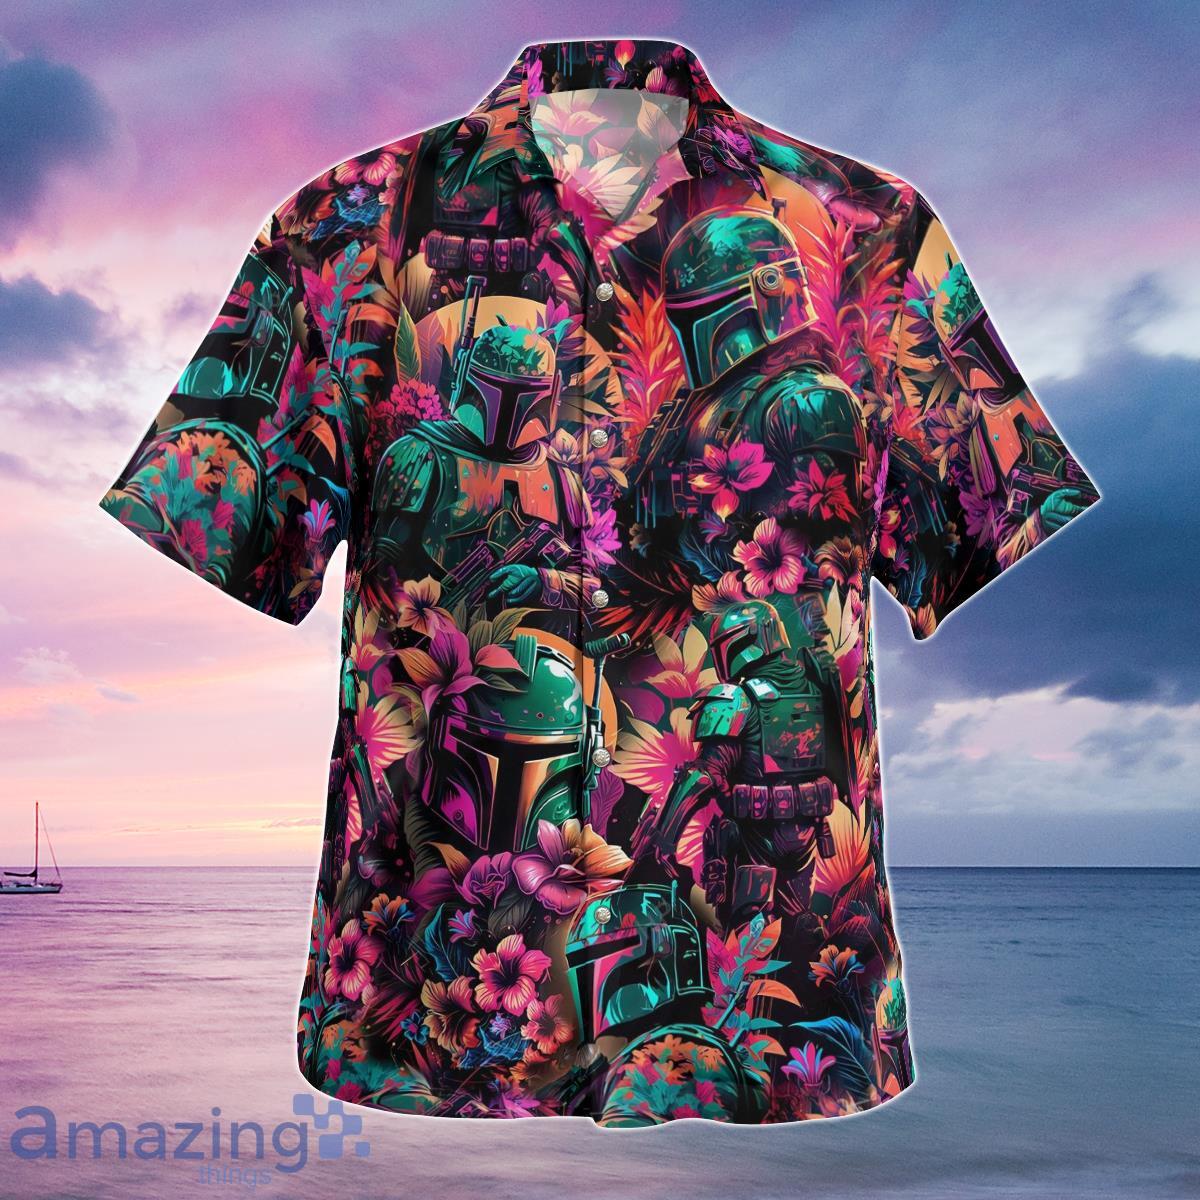 Starwars Synthwave Cool Hawaiian Shirt For Star Wars Movie Fans